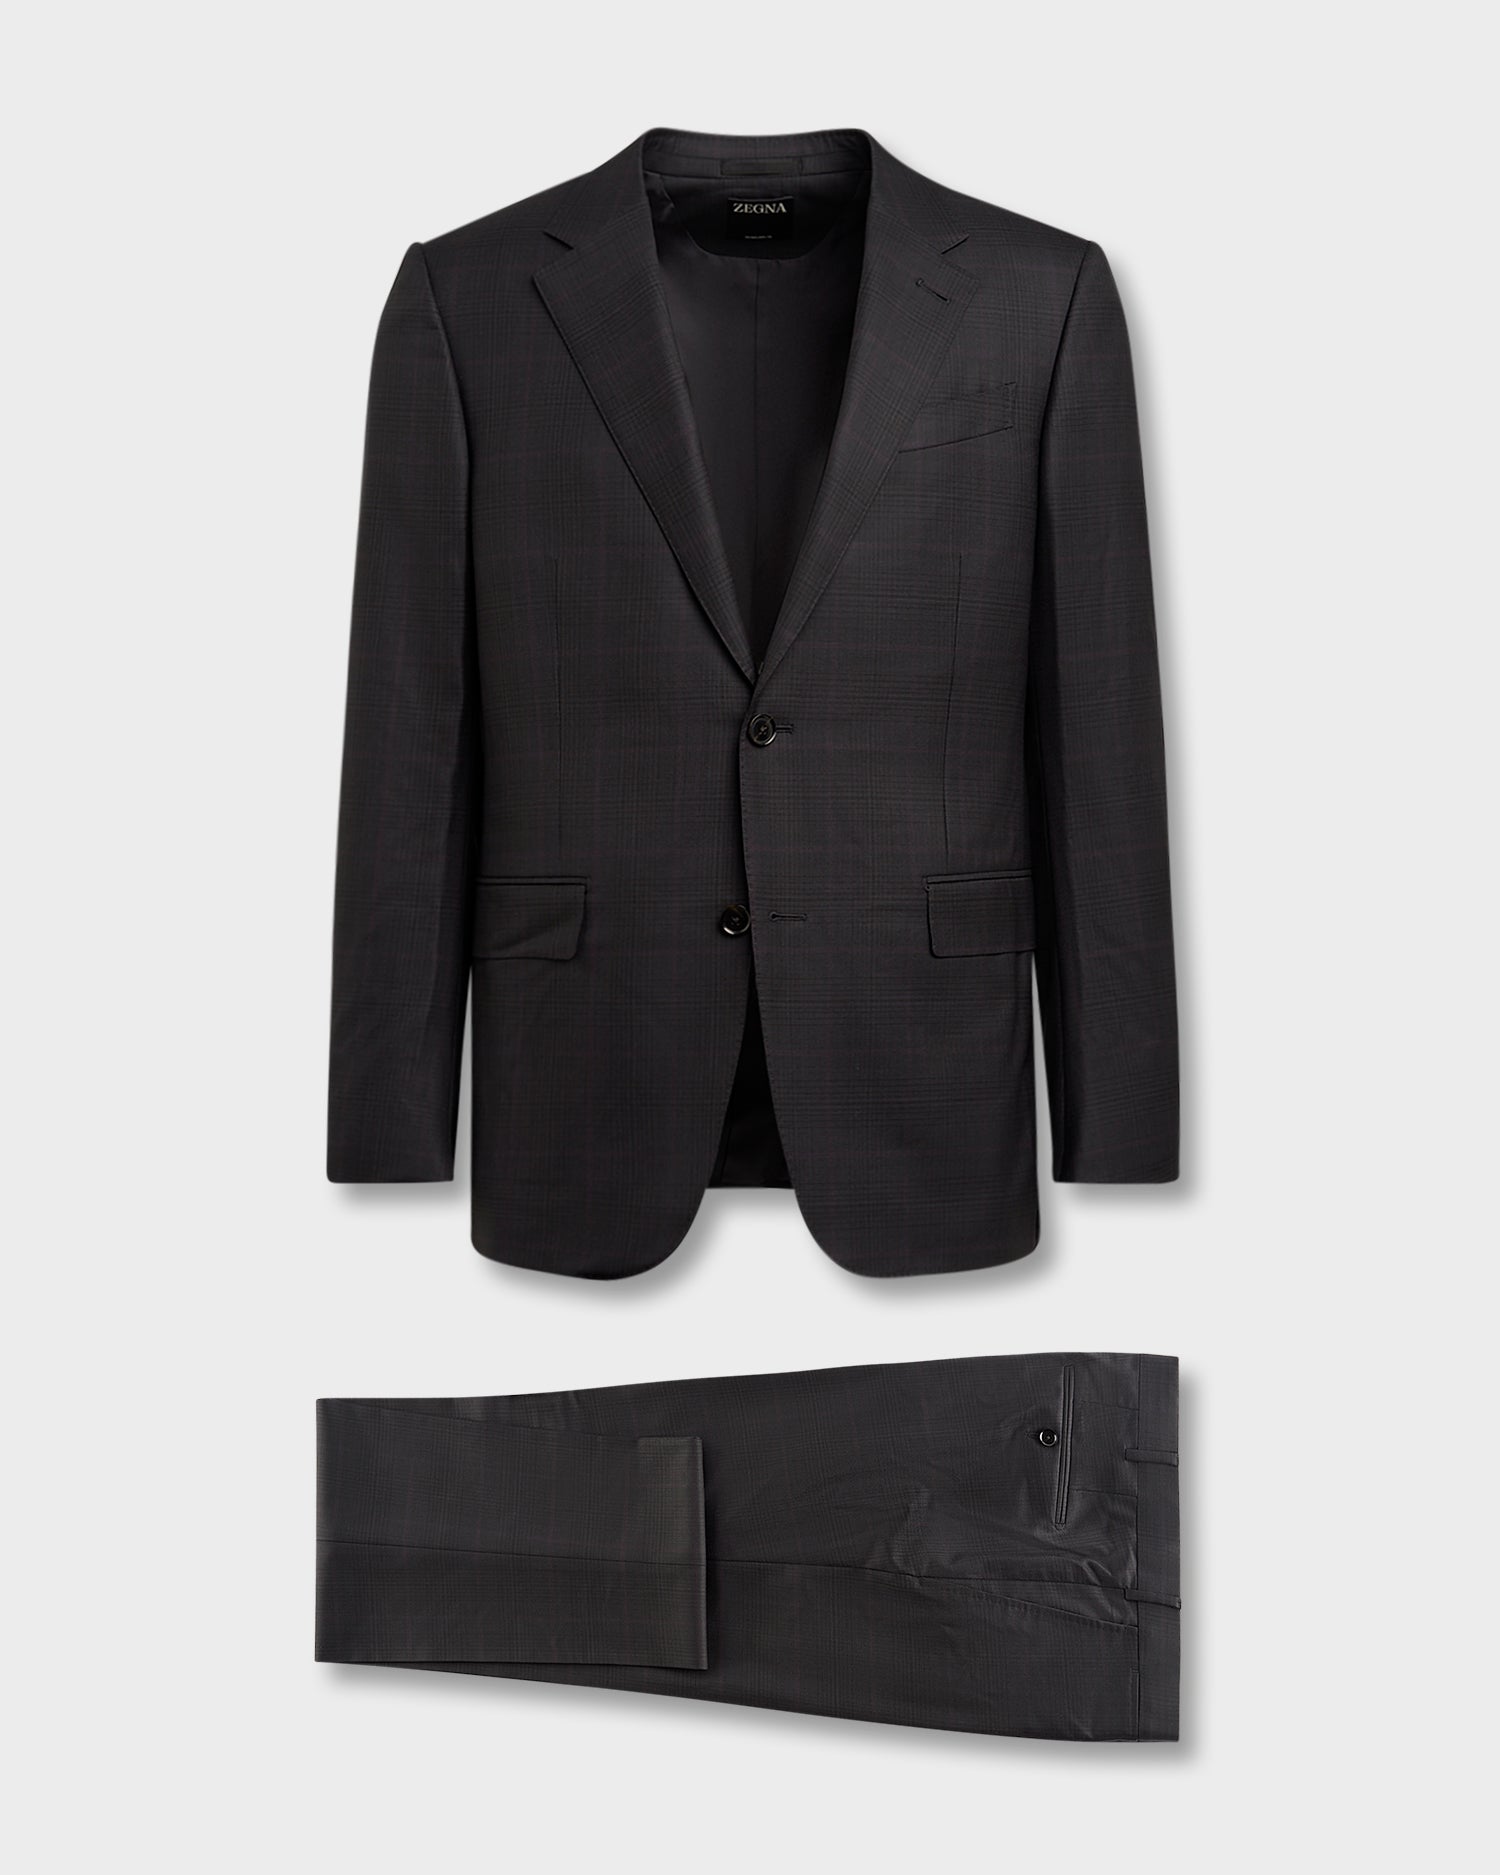 Dark Charcoal Glen Check With Burgundy Windowpane 15MILMIL150 Wool Suit